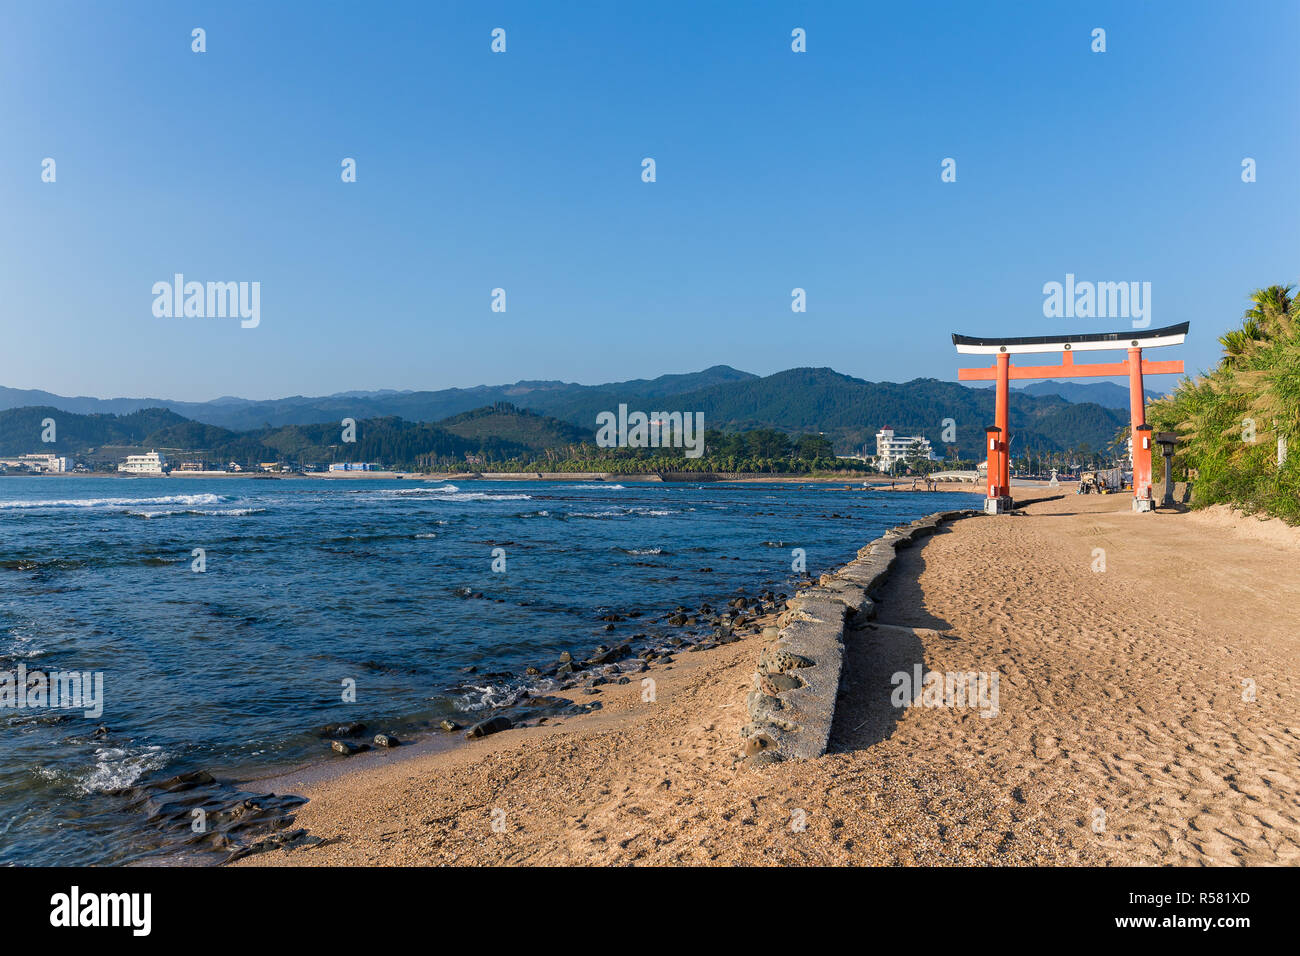 Aoshima japan hi-res stock photography and images - Alamy